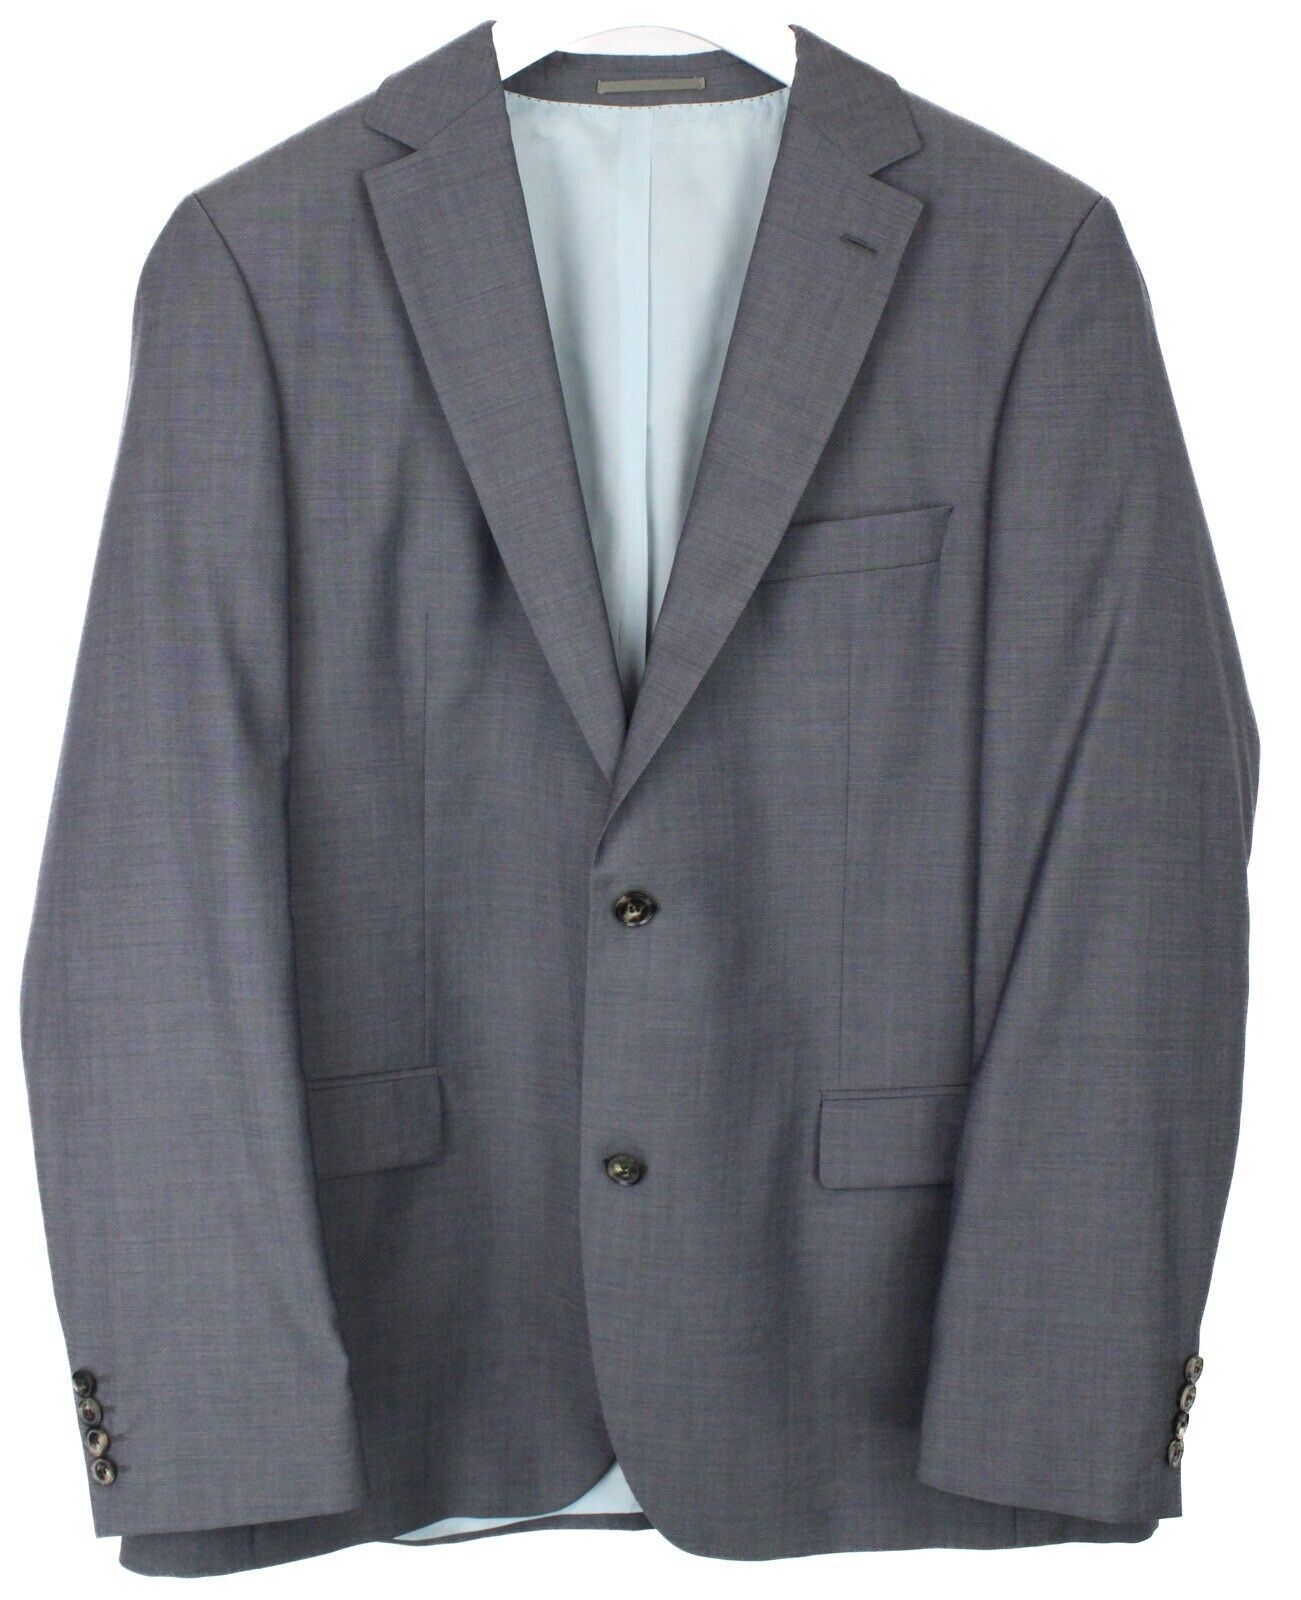 HUGO BOSS Pasolini/Movie Suit Men\'s US 42L Wool Notch Lapel Grey | eBay